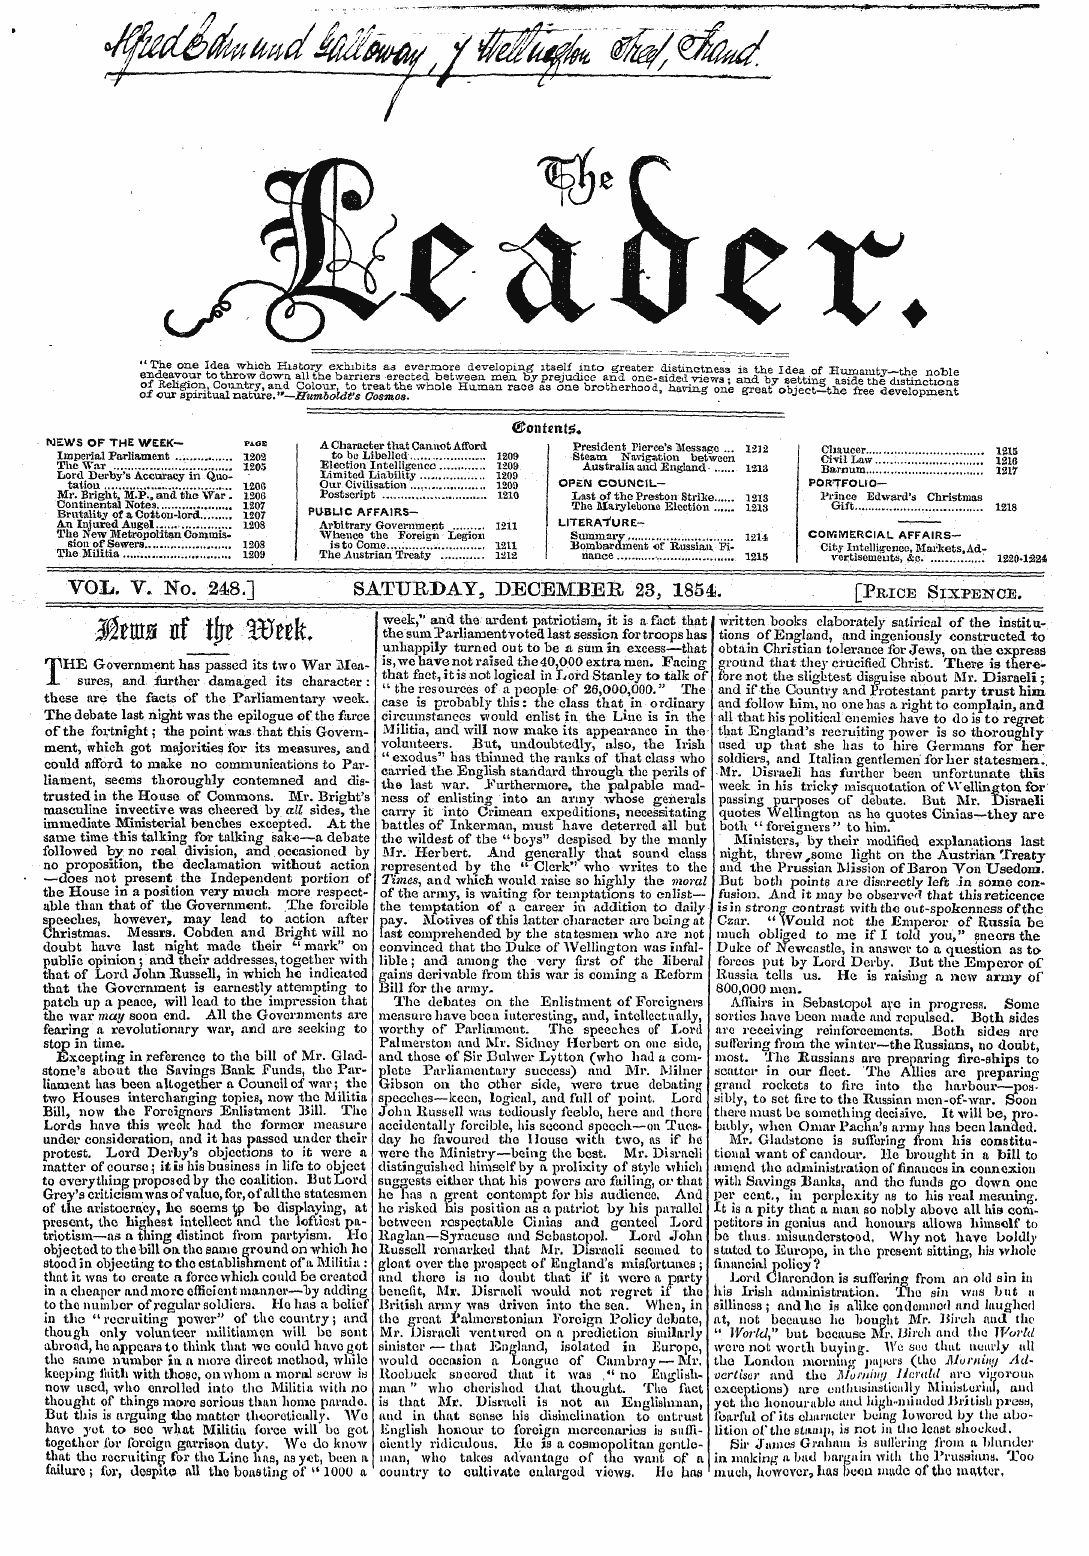 Leader (1850-1860): jS F Y, 2nd edition - Vox.. V. No. 248.] Saturday, December 23...